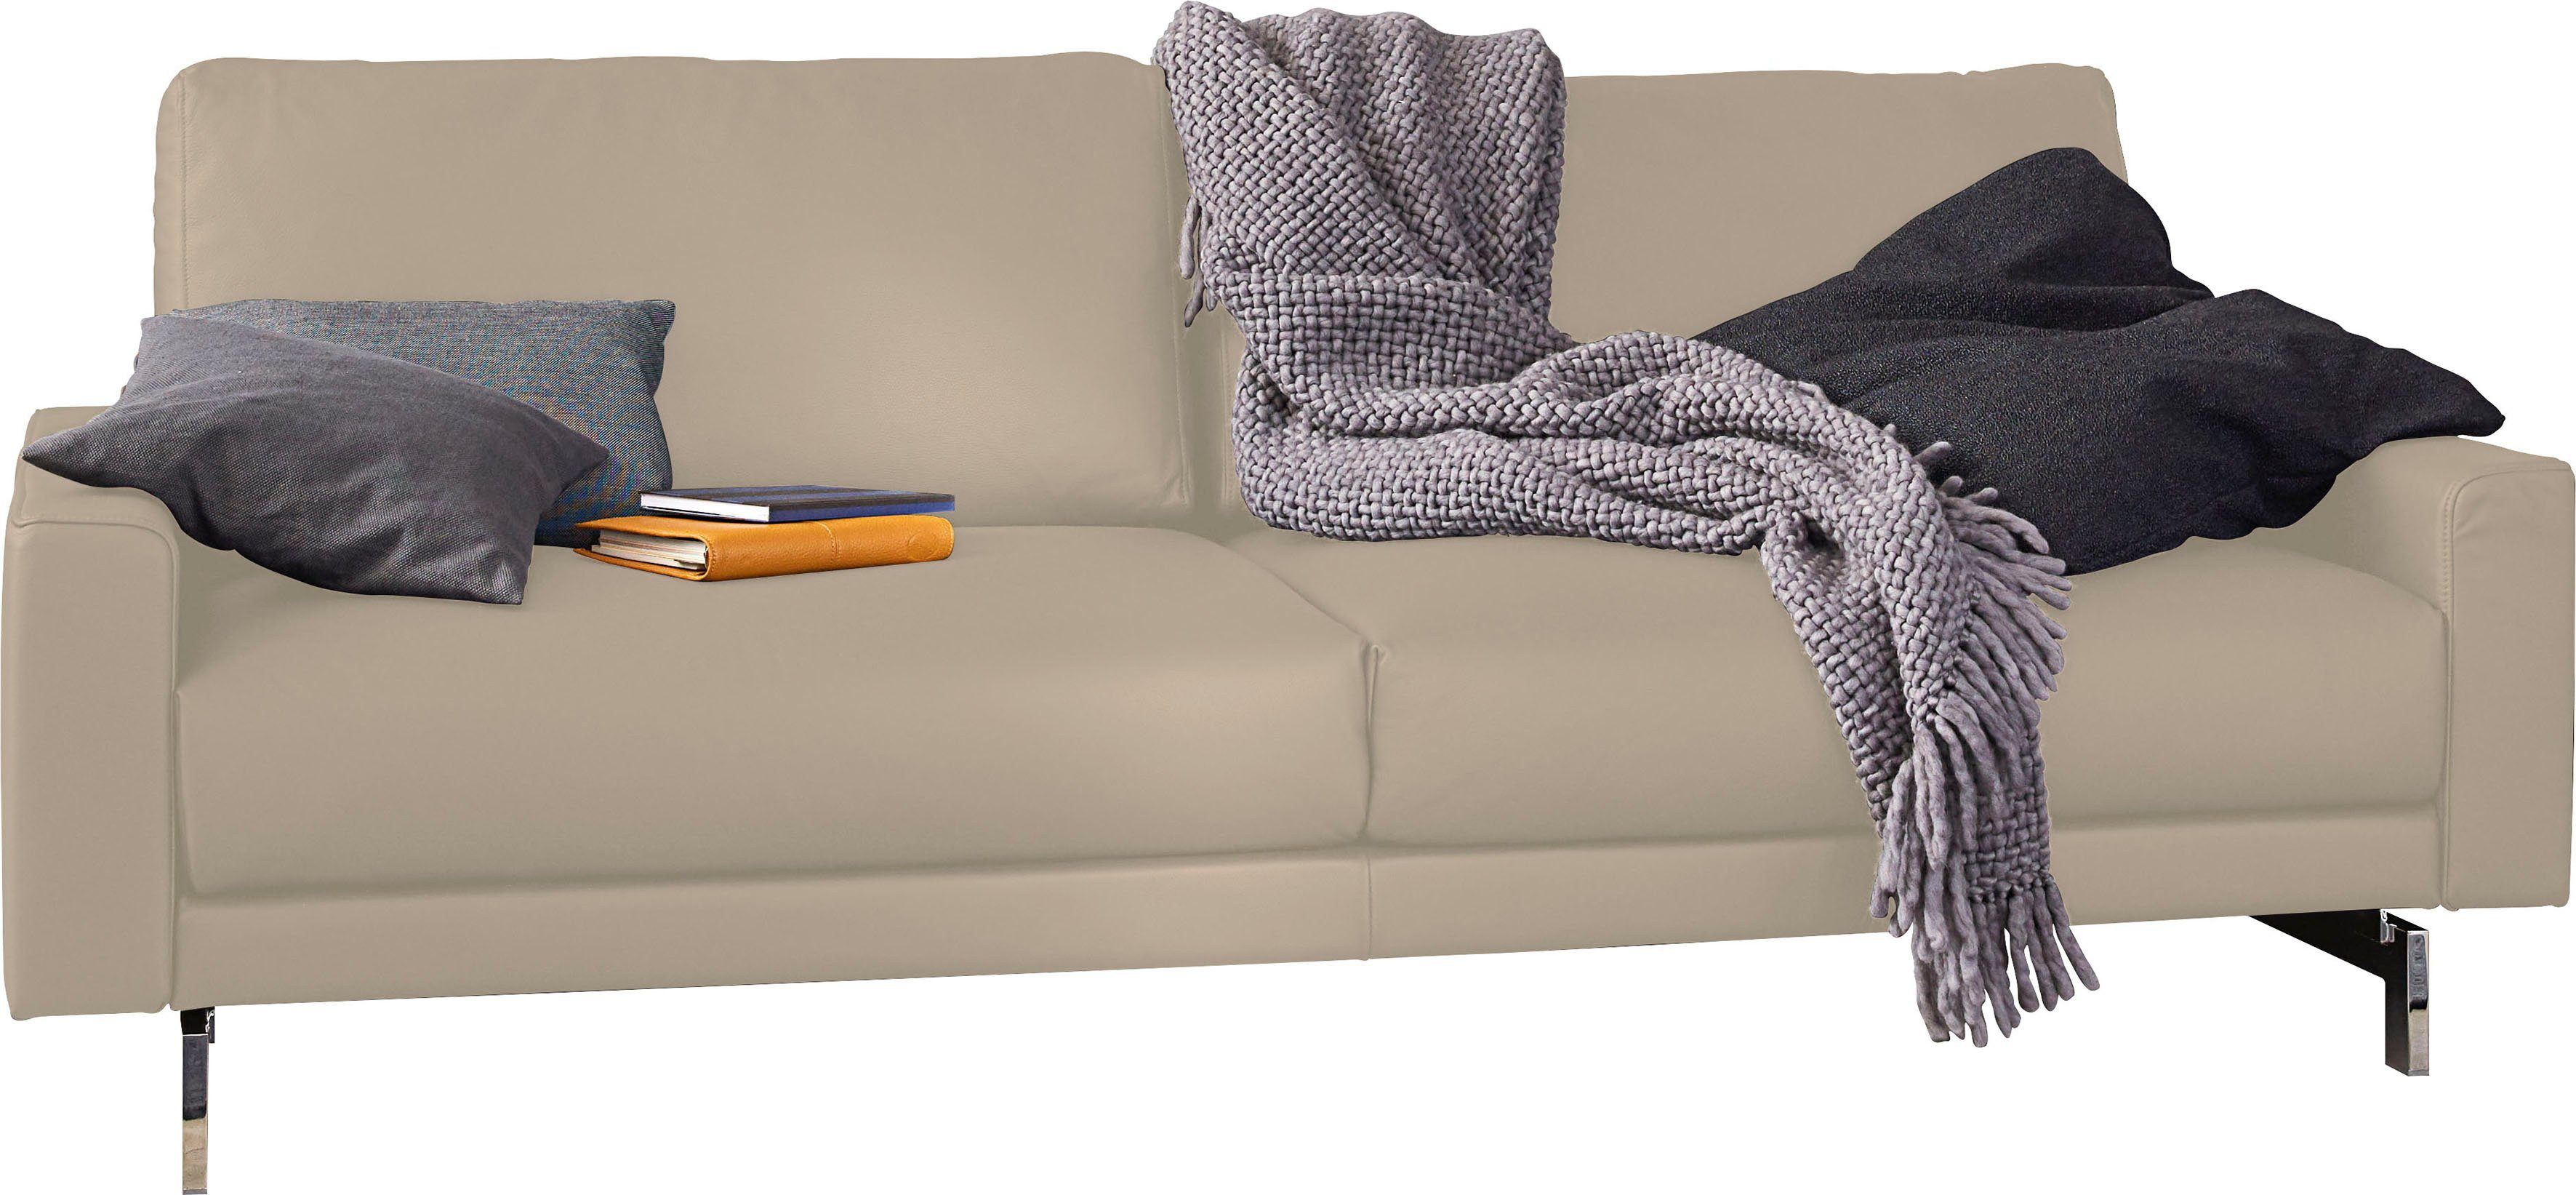 hülsta sofa glänzend, Breite 2-Sitzer Fuß Armlehne chromfarben 164 cm niedrig, hs.450